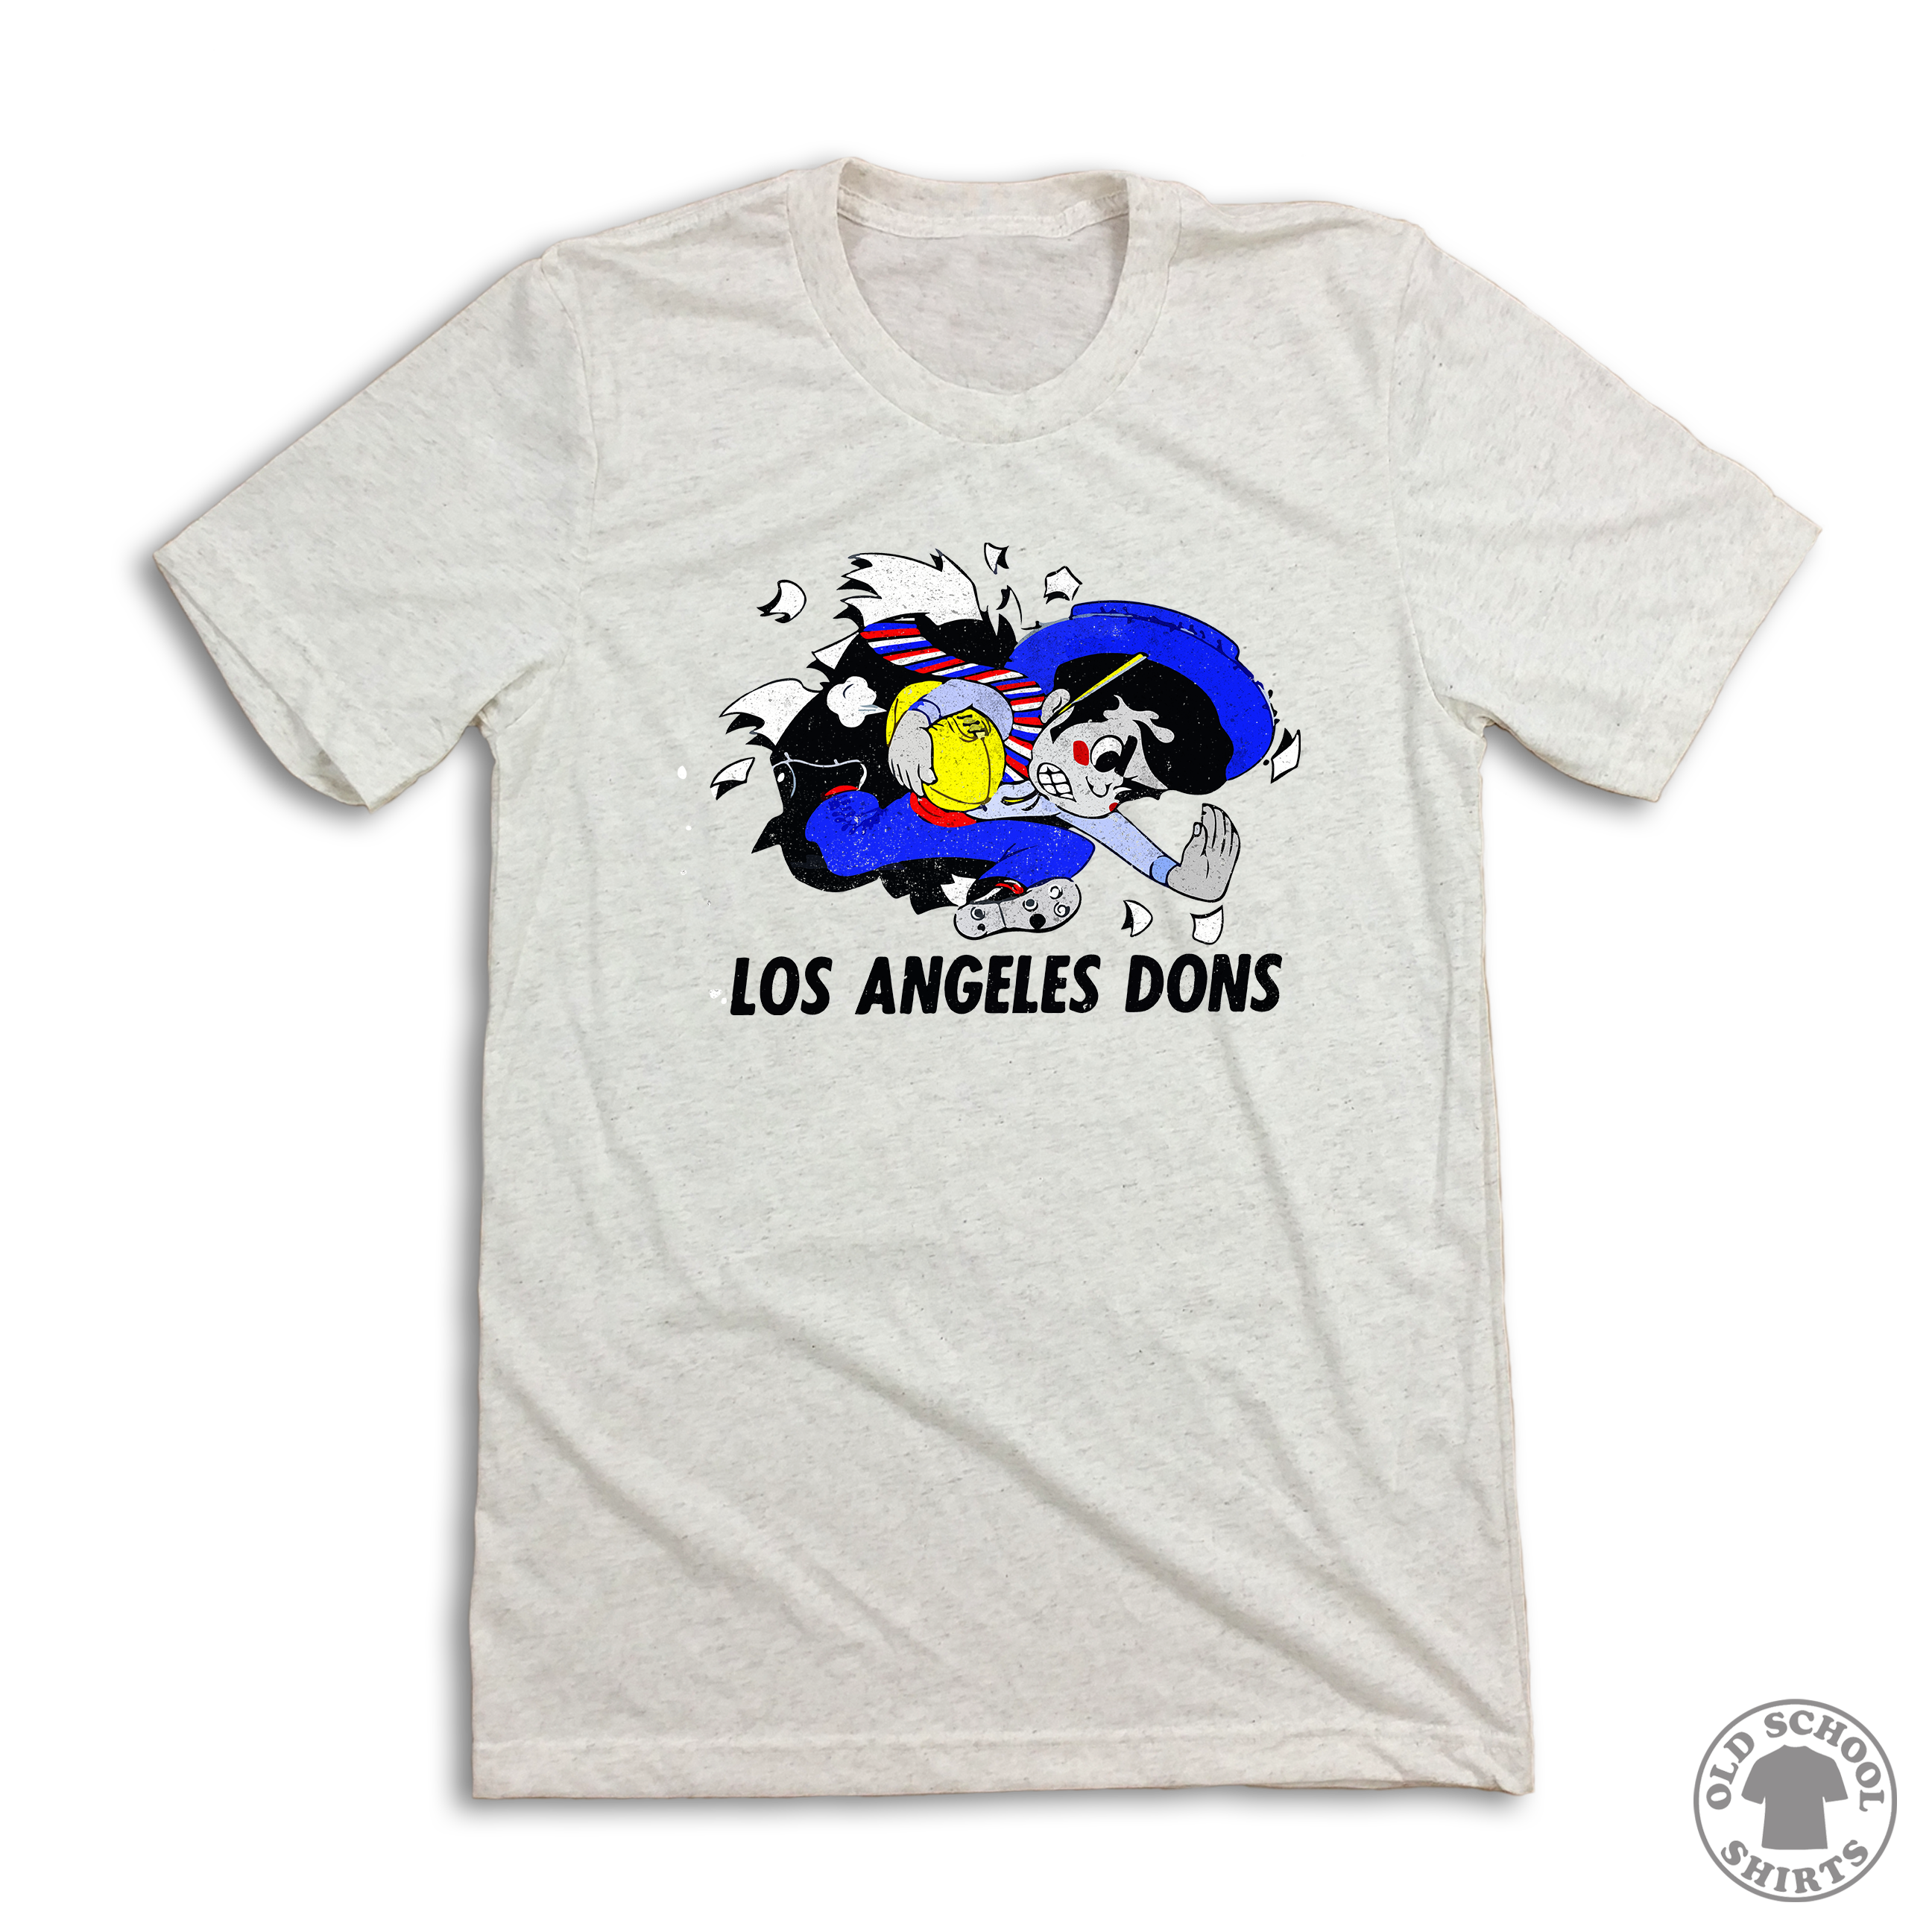 Vintage Los Angeles Dodgers Baseball Jersey -Blue - L – Headlock